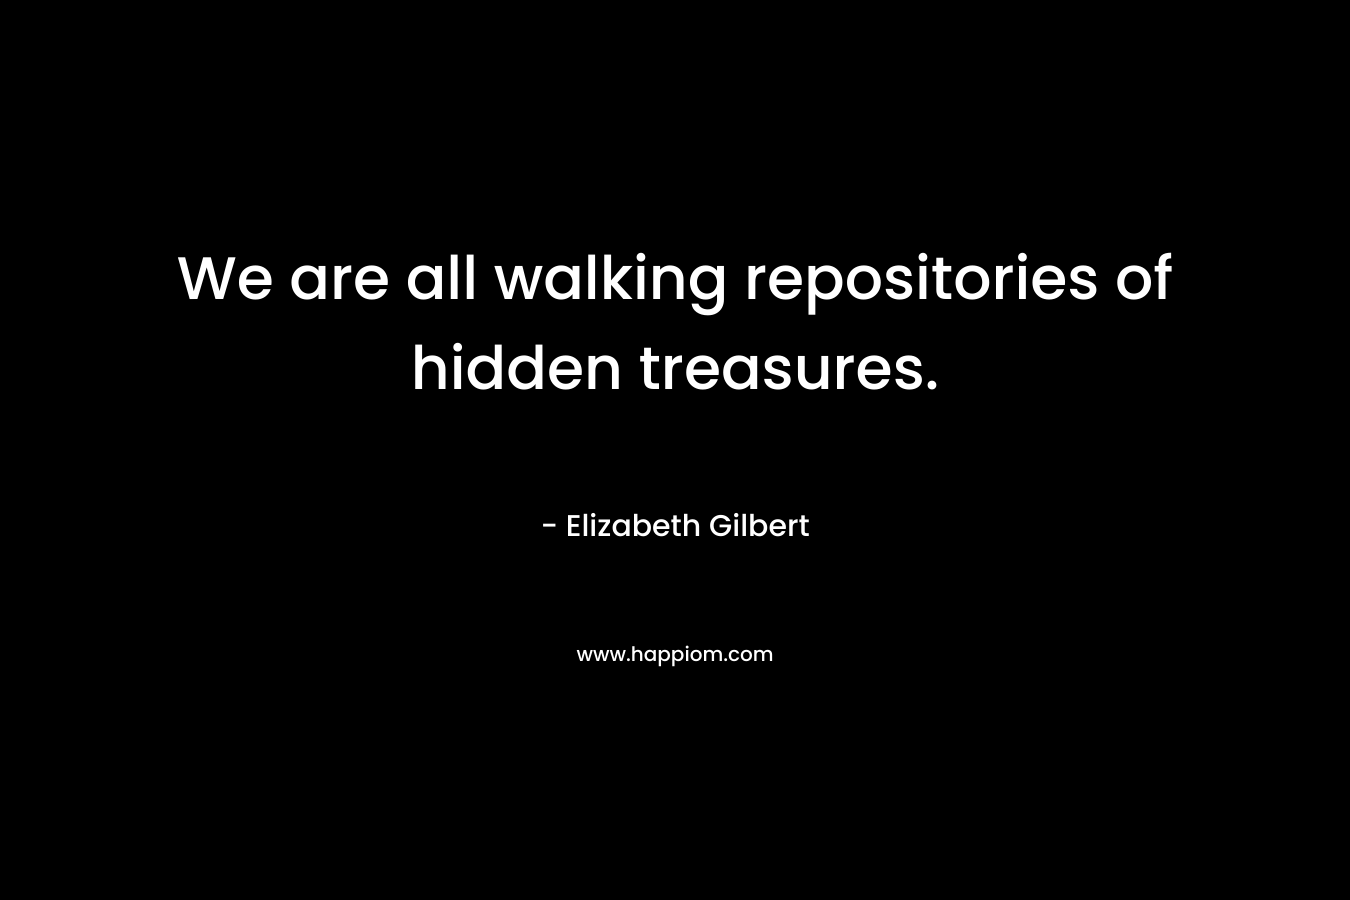 We are all walking repositories of hidden treasures.